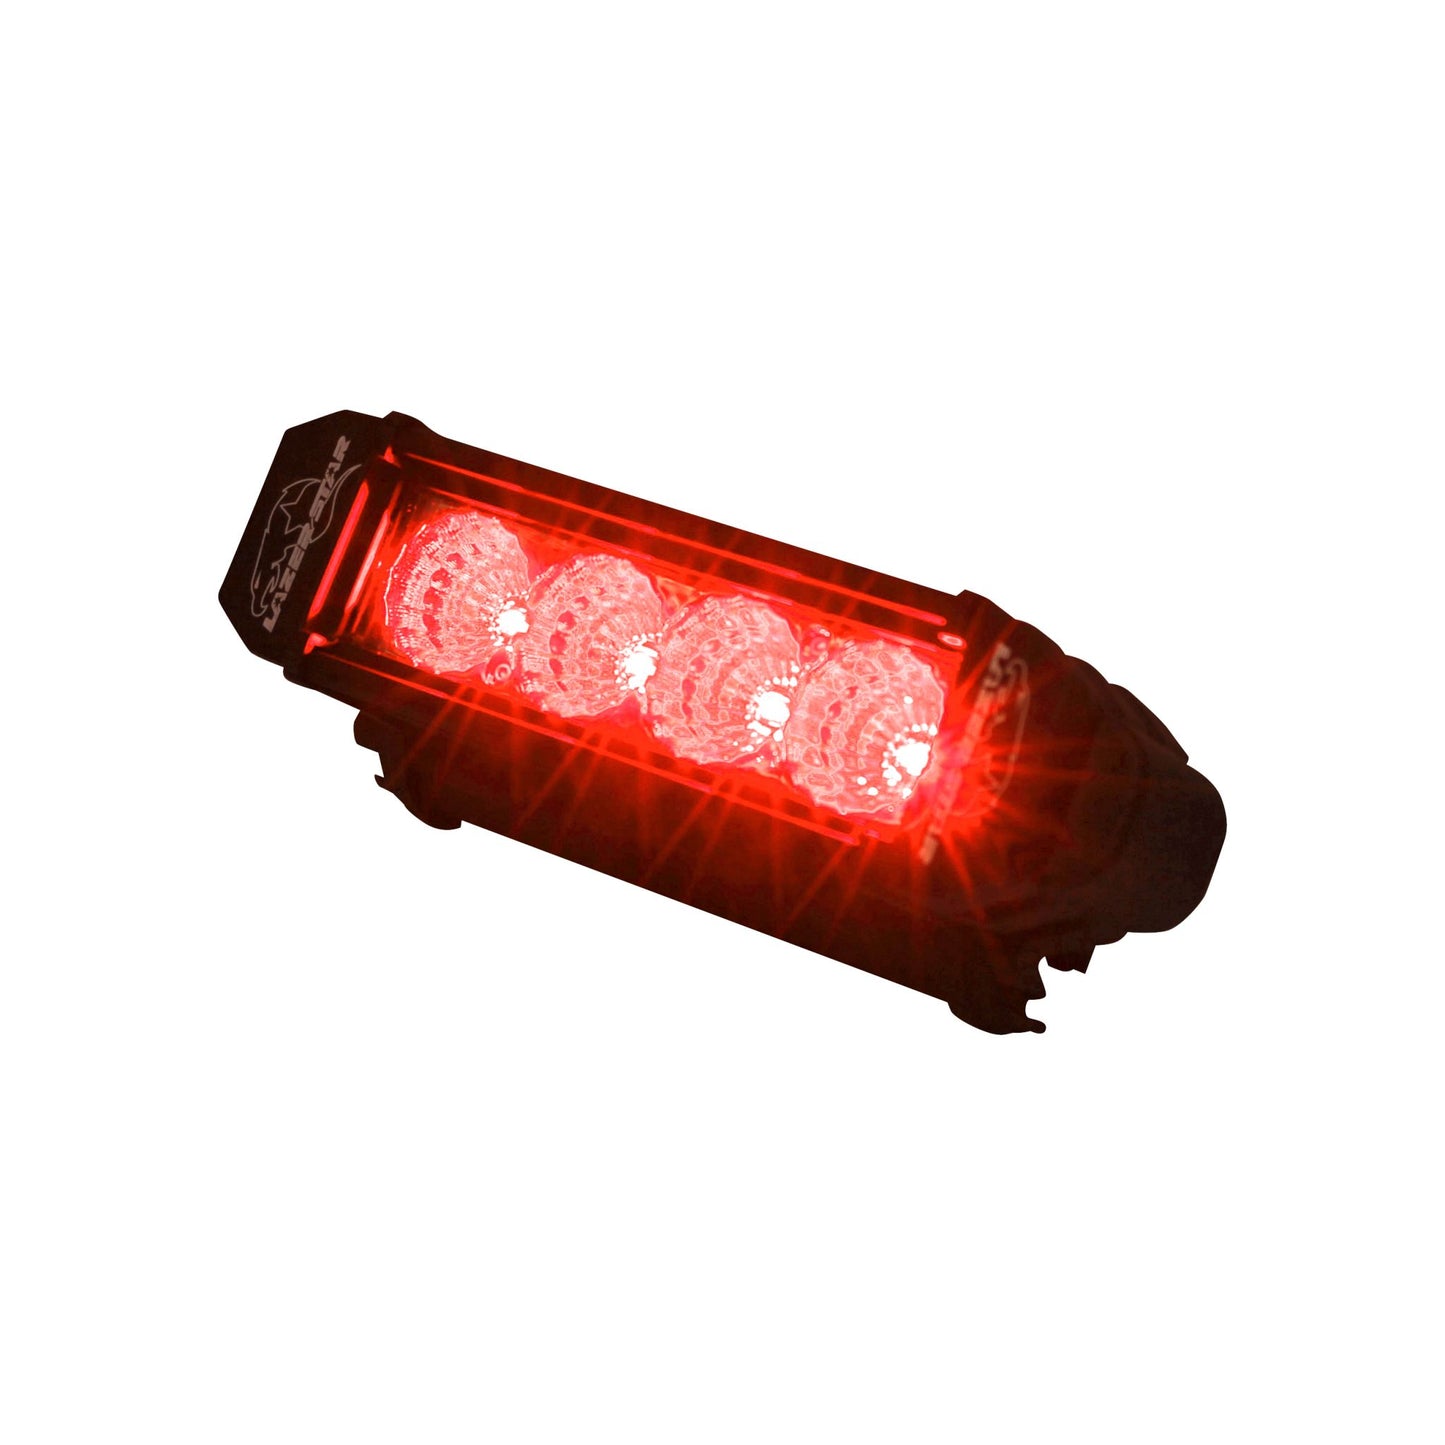 Lazer Star Lights 6" - 3 WATT / 4 LED / SINGLE ROW RED/ FLOOD / RACER TAILLIGHT 13040205